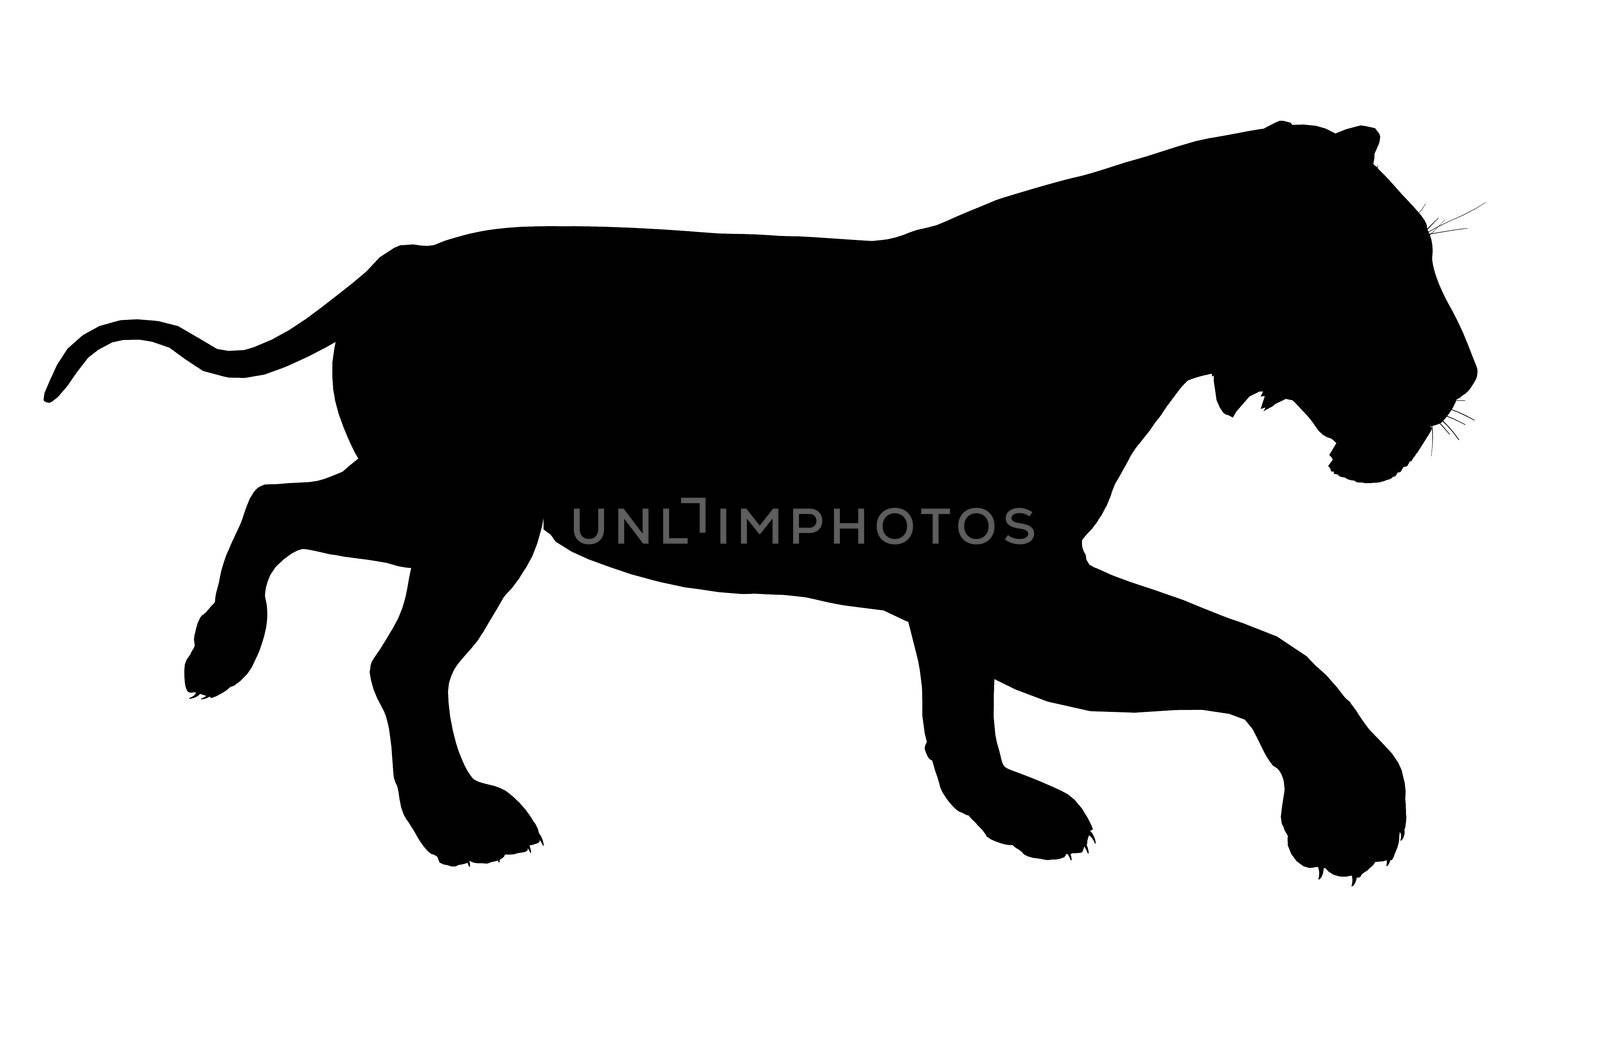 Black lion art illustration silhouette on a white background